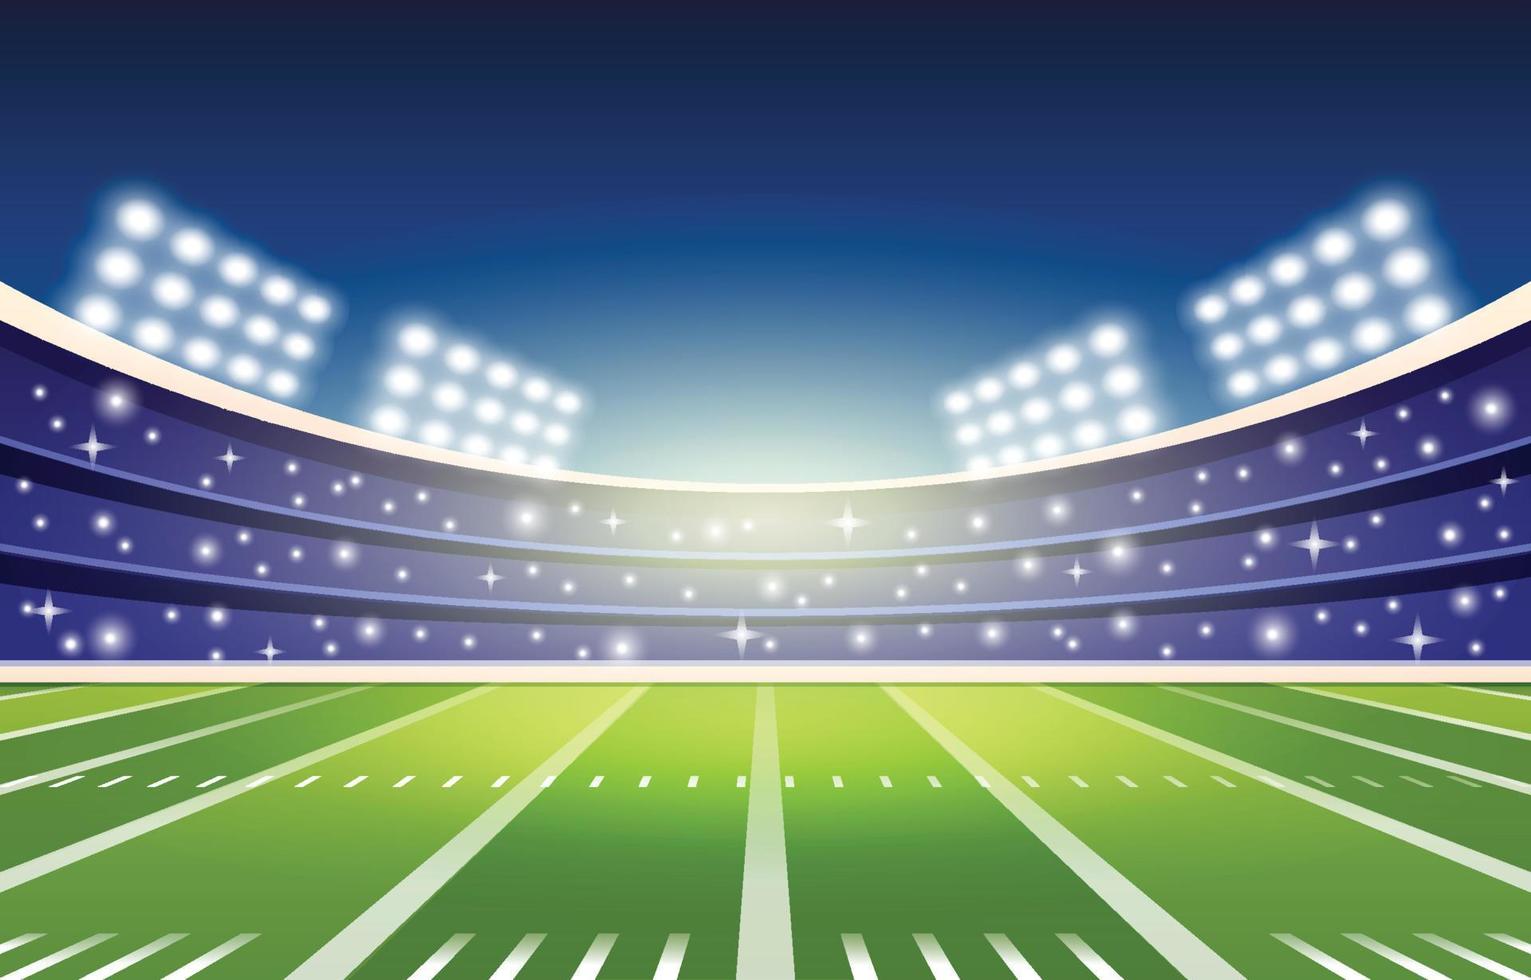 Superbowl Football Field Background vector